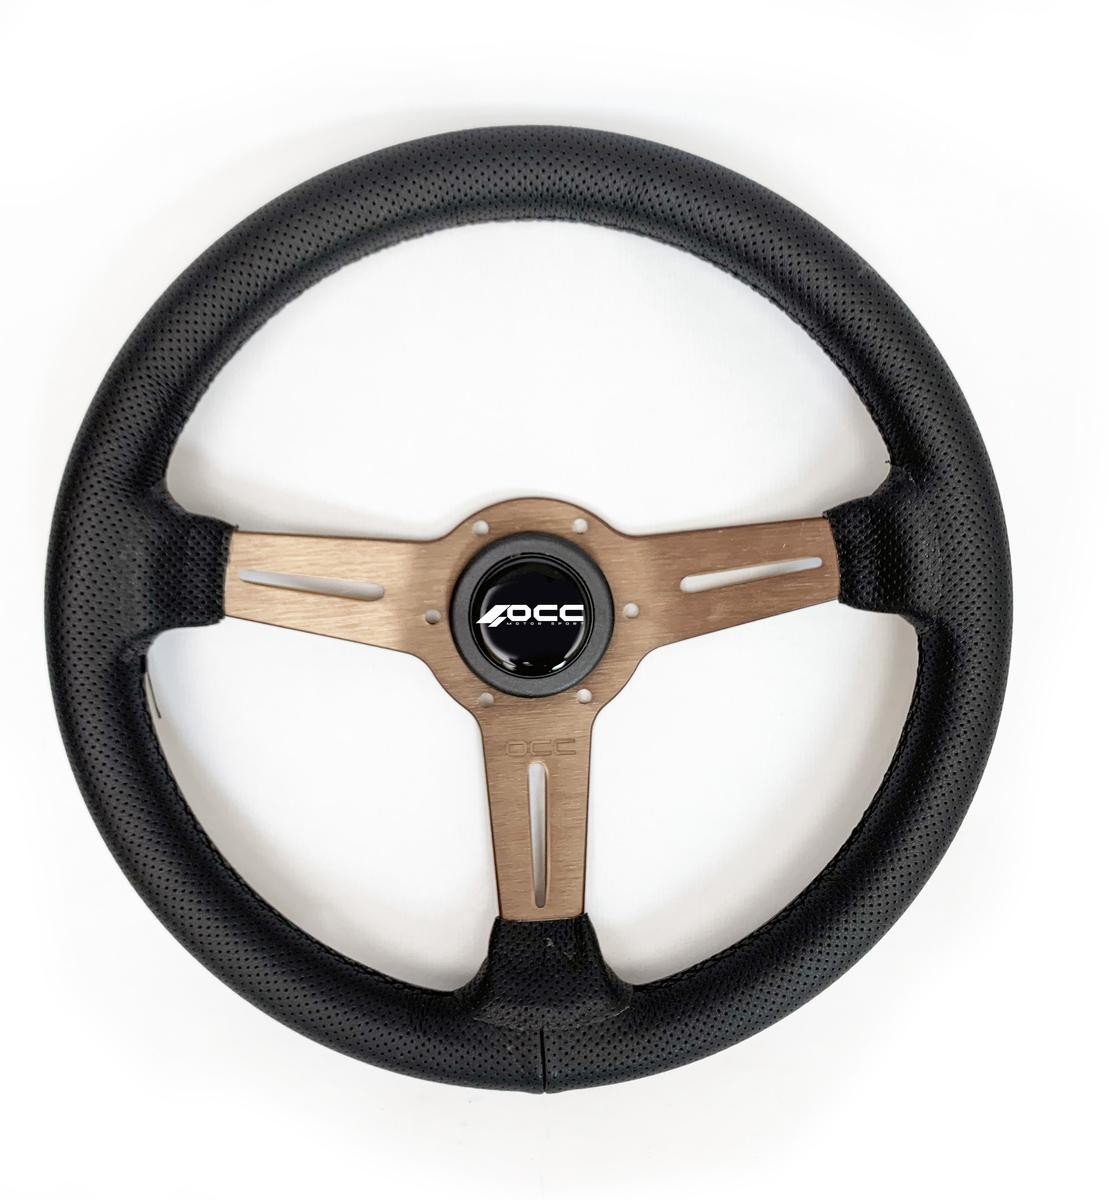 Suzuki Sports steering wheel Occ Motorsport OCCVOL009 at a good price